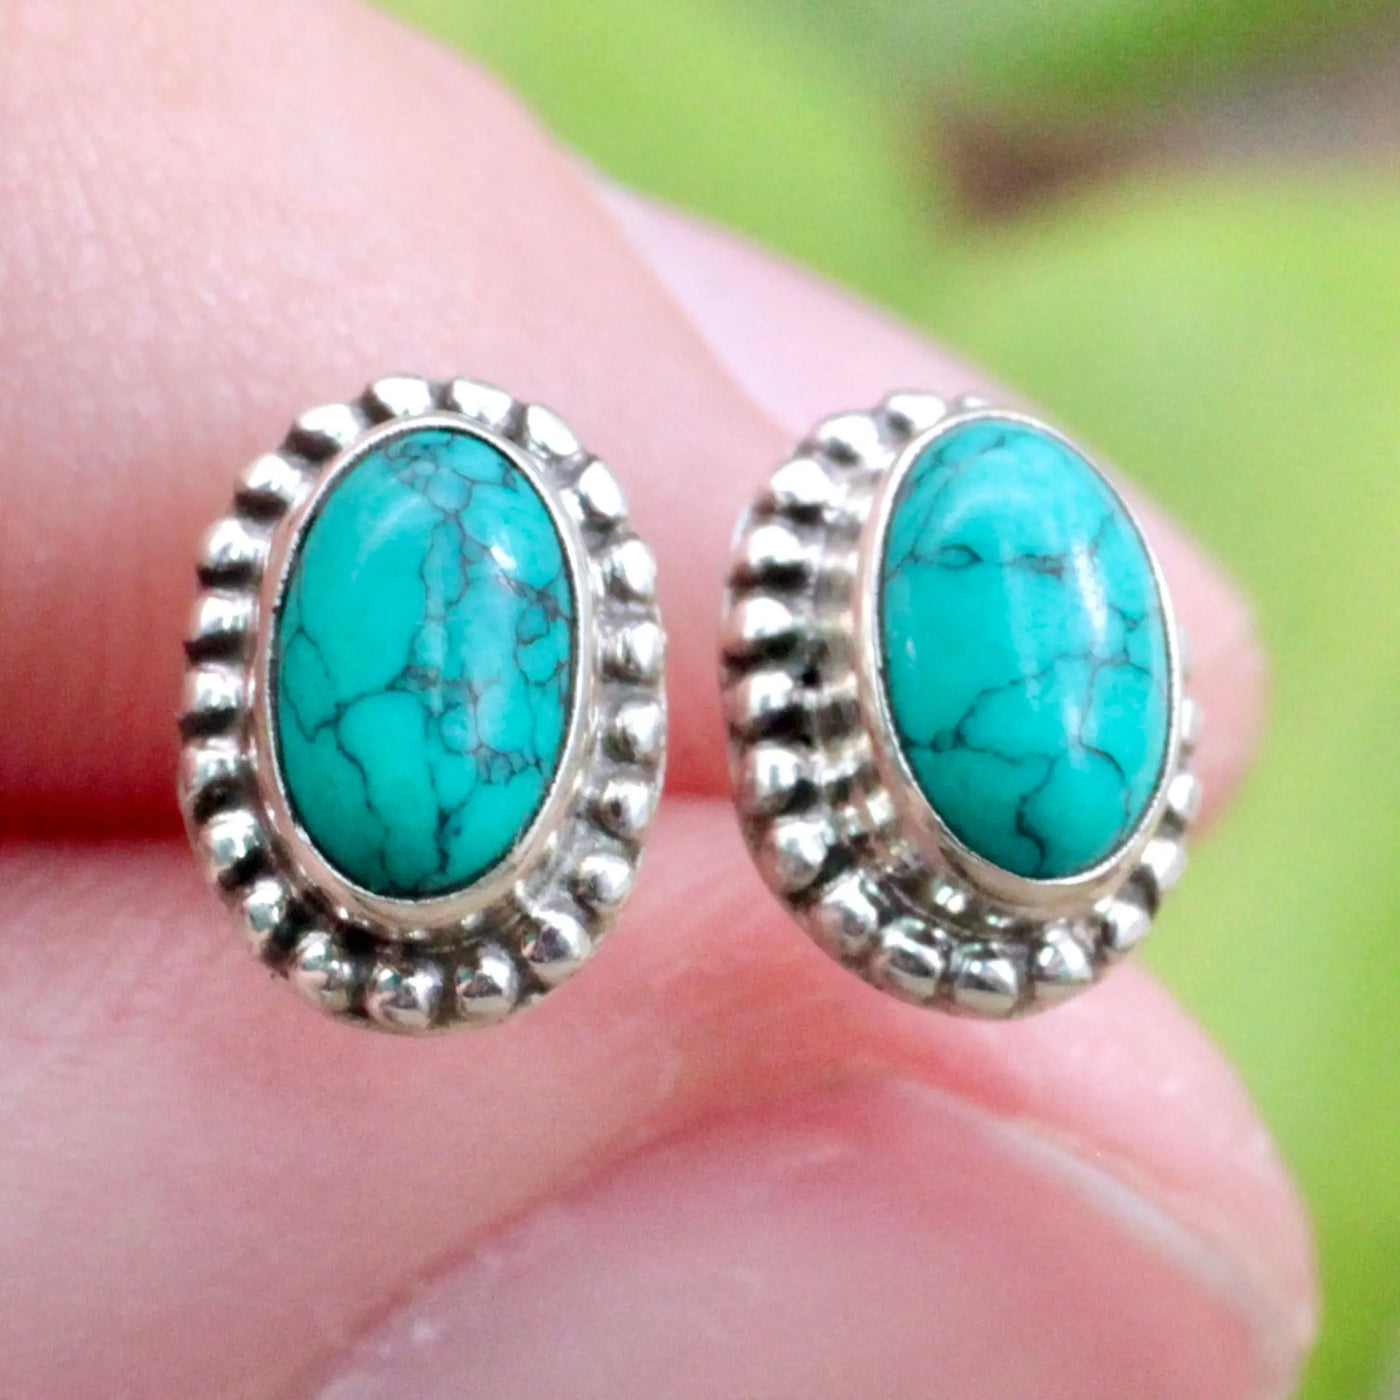 Tibetan Turquoise Stud Earrings with Silverwork in Sterling Silver